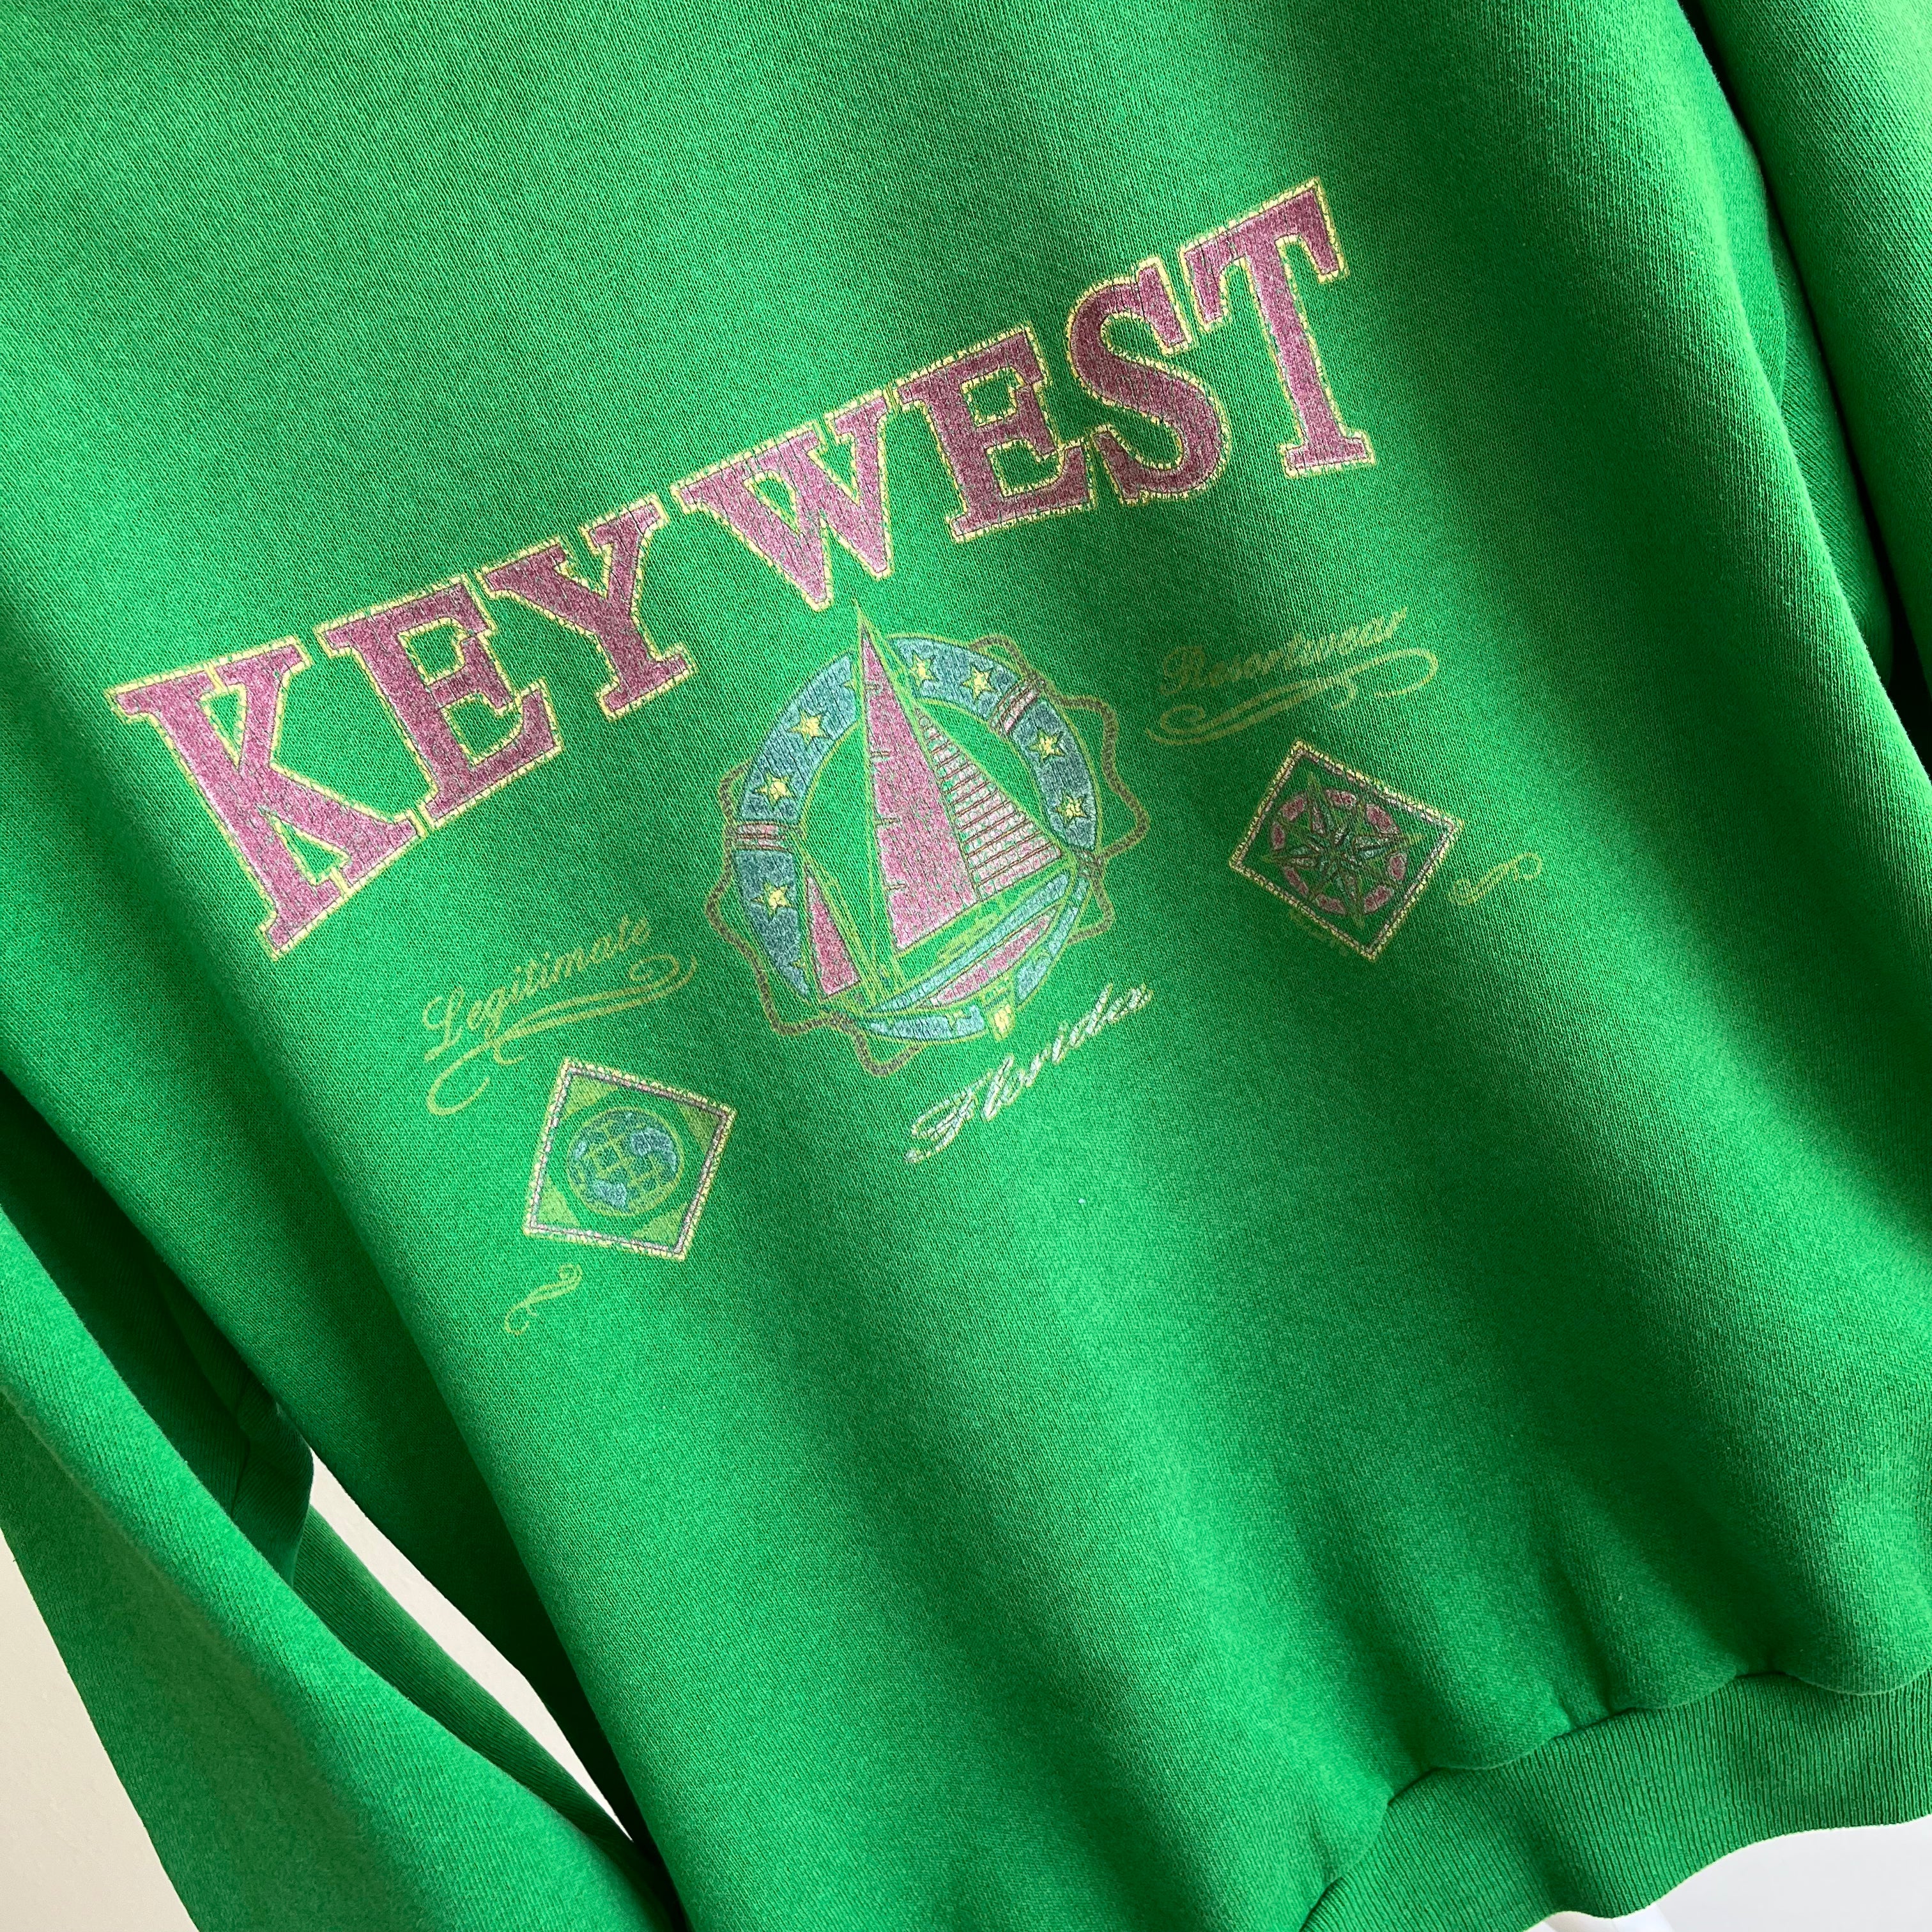 1990s Key West Tourist Sweatshirt - The Backside!